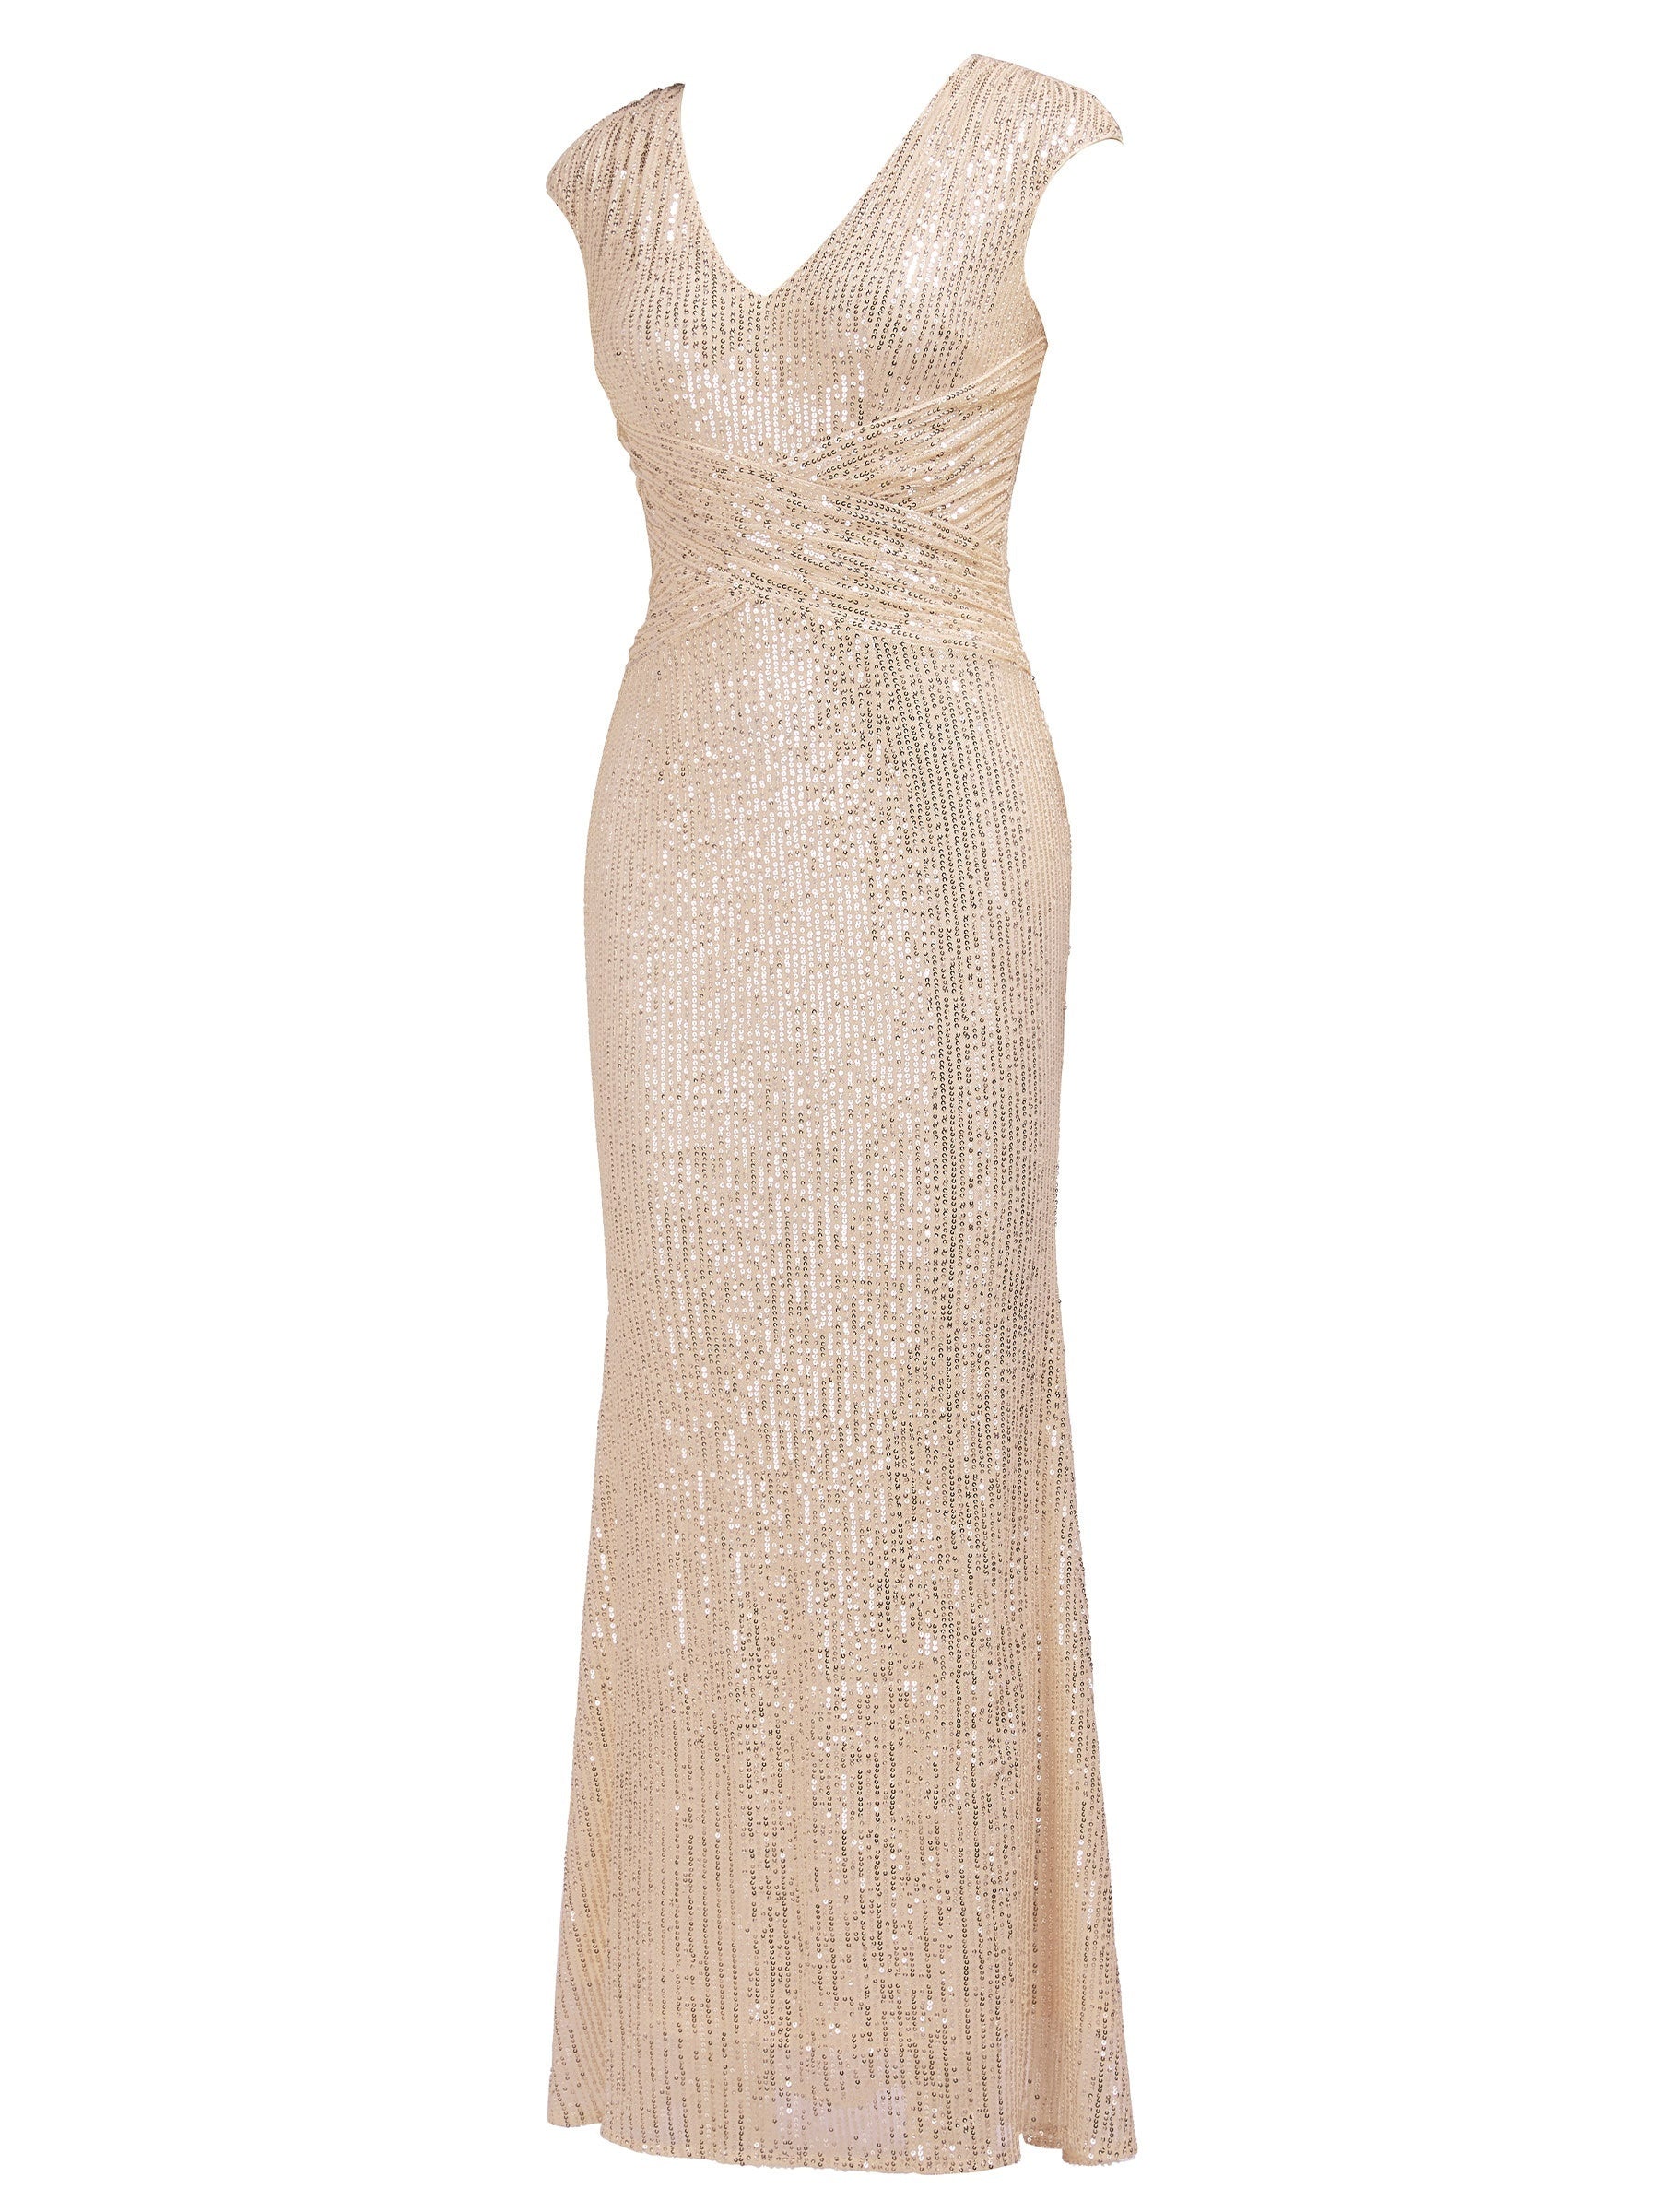 XUIBOL | Contrast Sequin Sleeveless Dress, Elegant V Neck Bodycon Party Maxi Dress